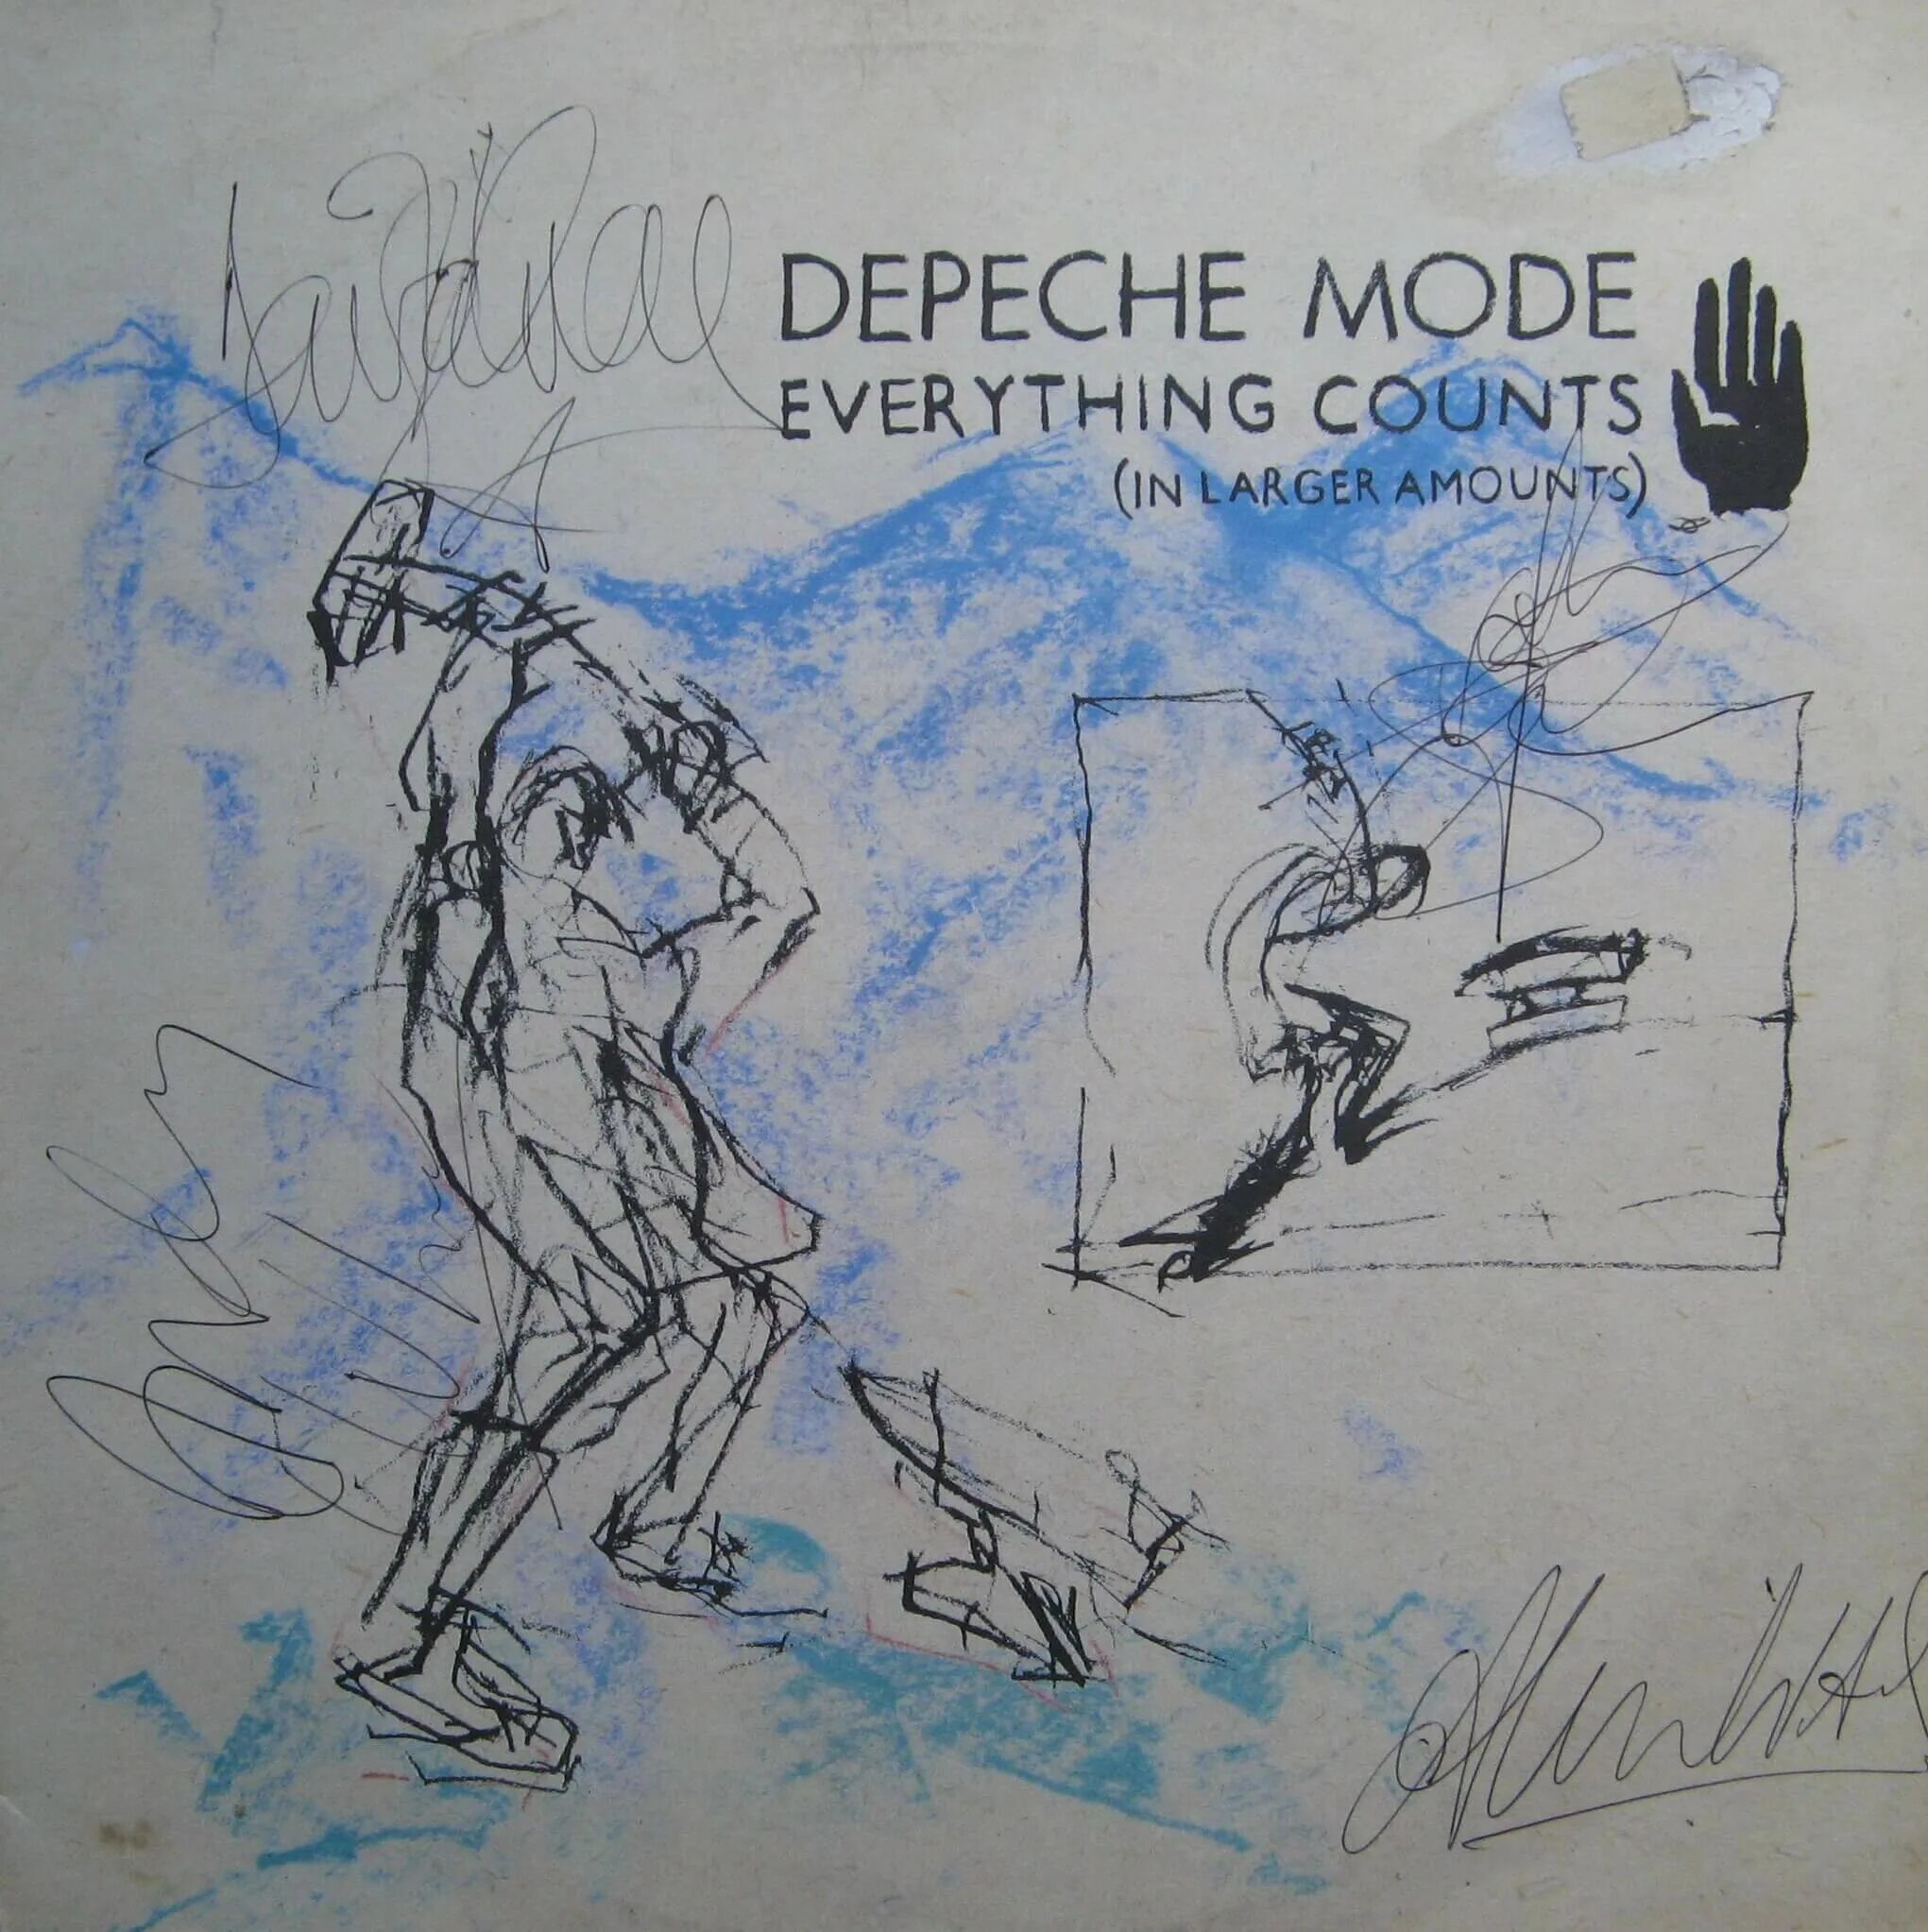 Everything counts. Depeche Mode everything counts. Depeche Mode everything counts обложка. Depeche Mode everything counts обложка Ограниченное издание. Автограф Энди Флетчера из депеш мод.